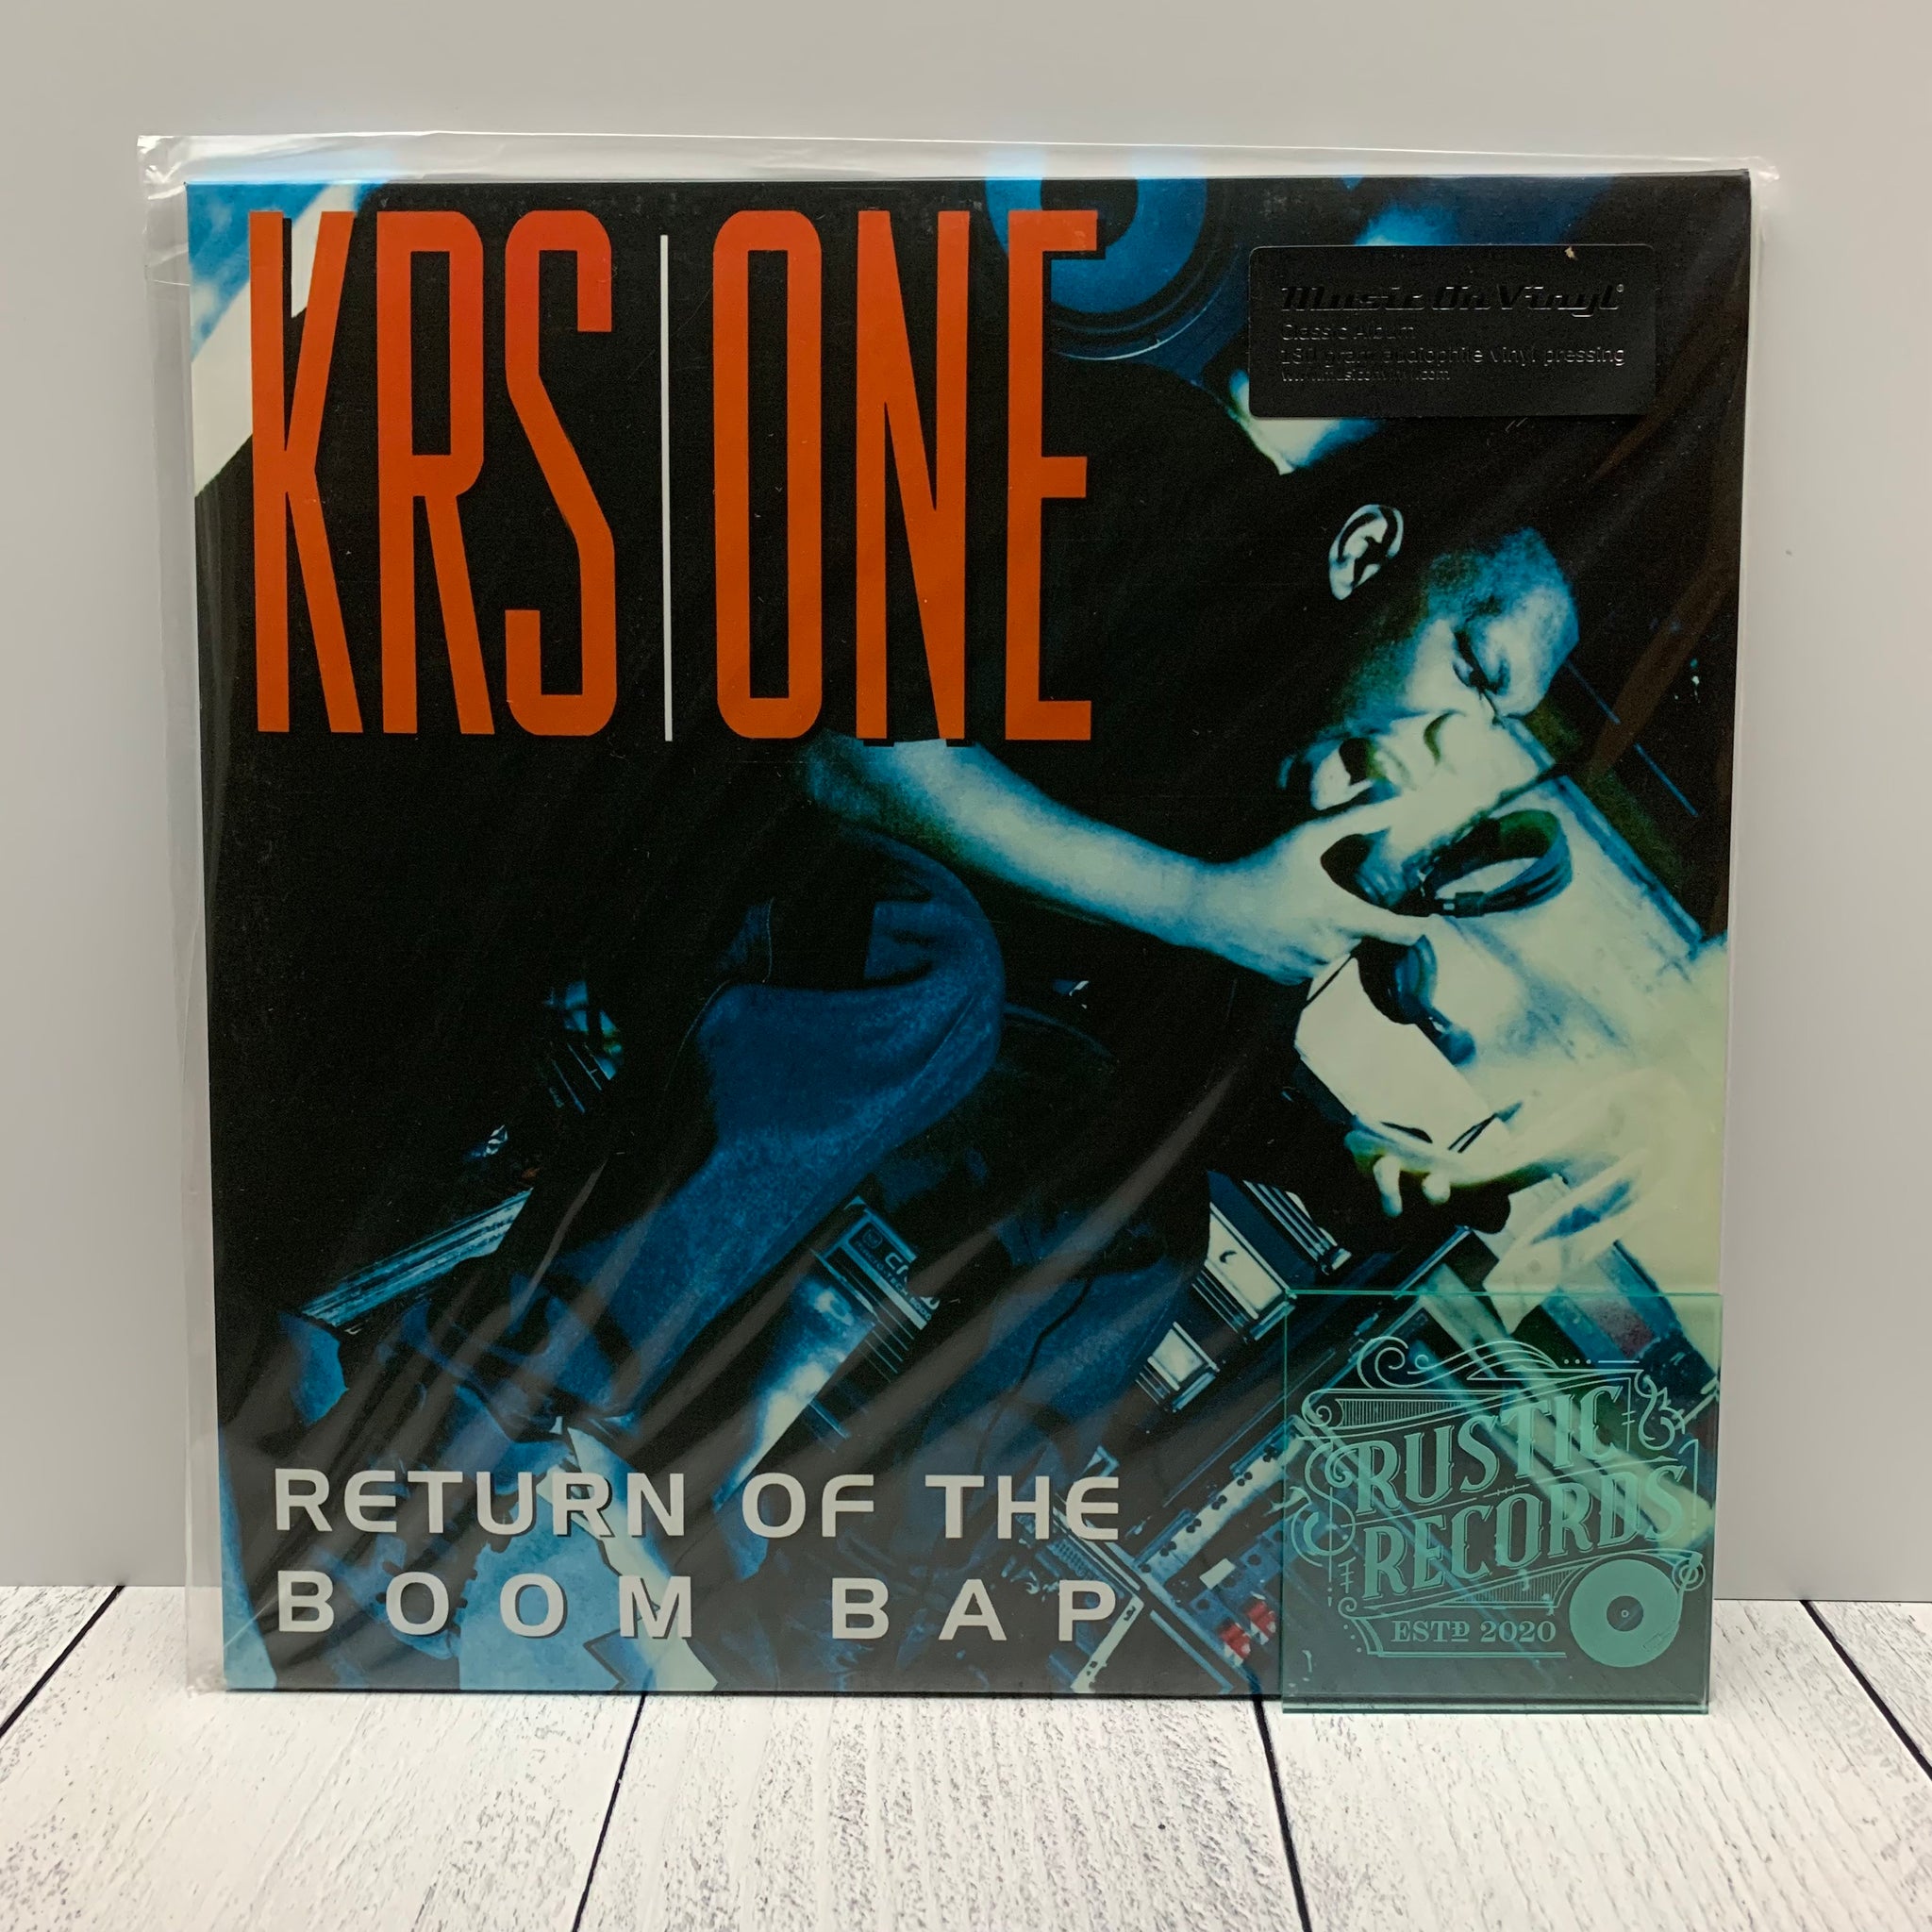 KRS One - Return Of The Boom Bap (Music On Vinyl)